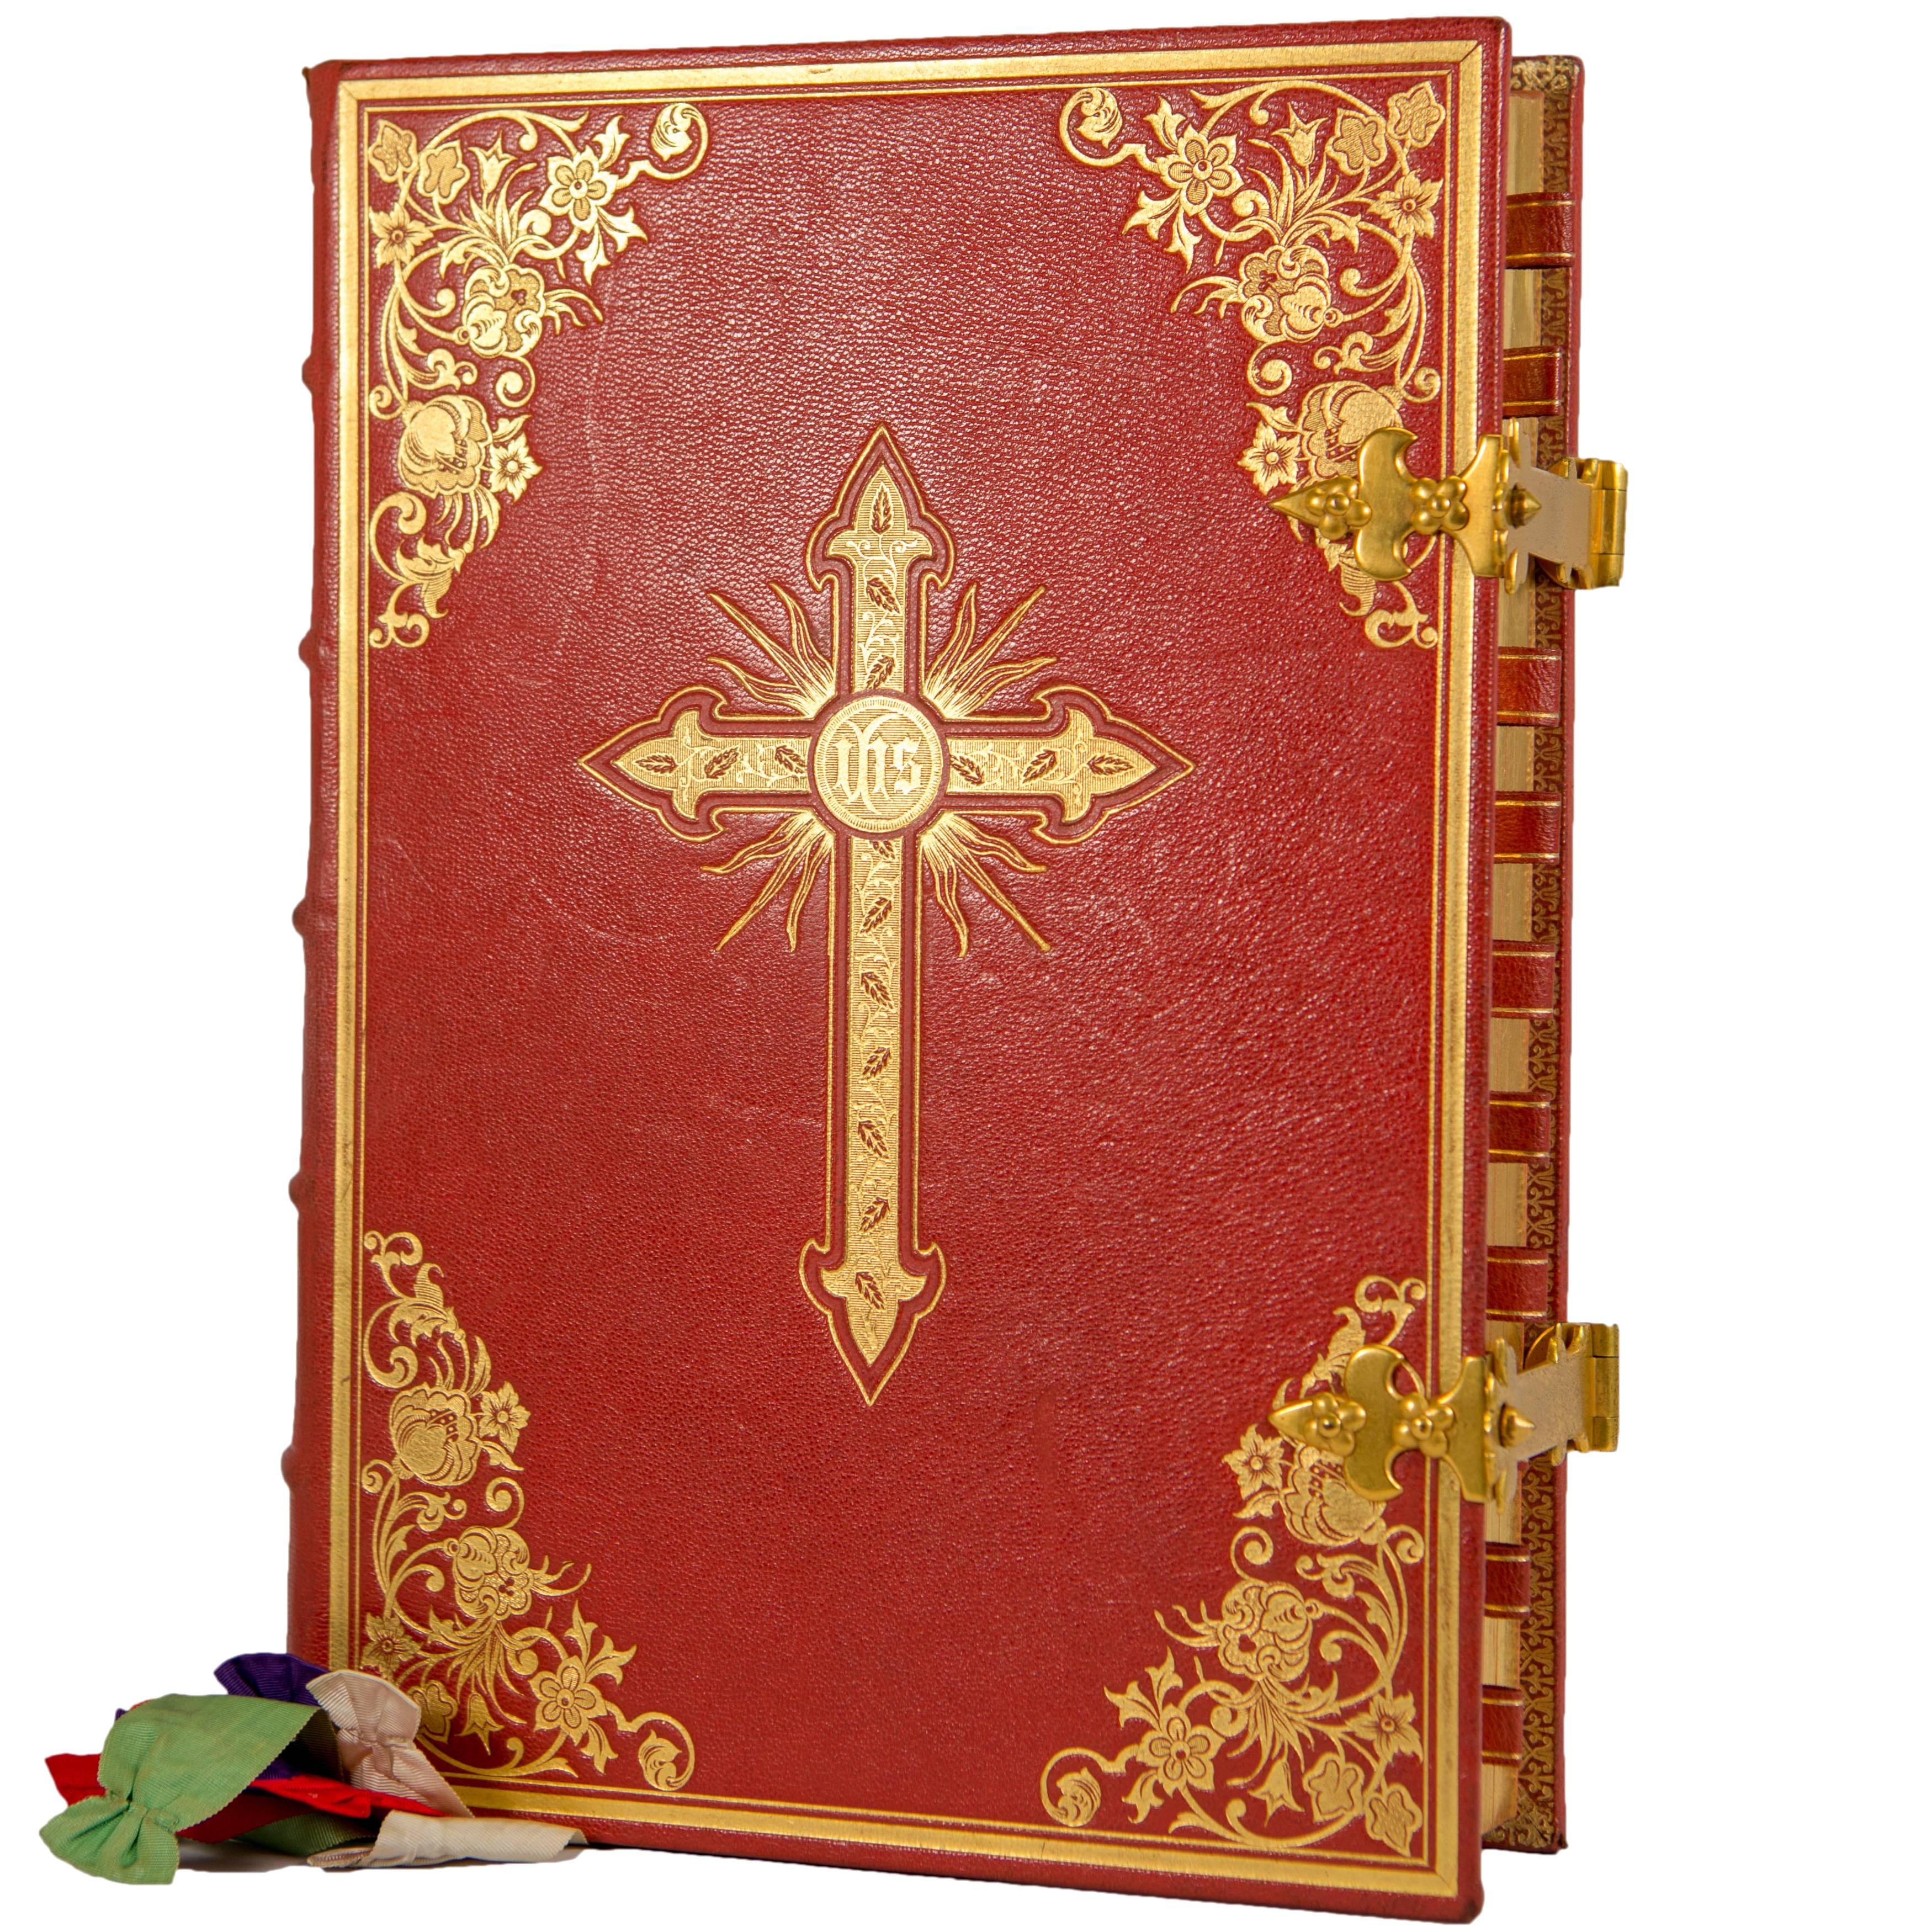 Missale Romanum, Vintage Catholic Church Missal for Mass Celebration in Latin